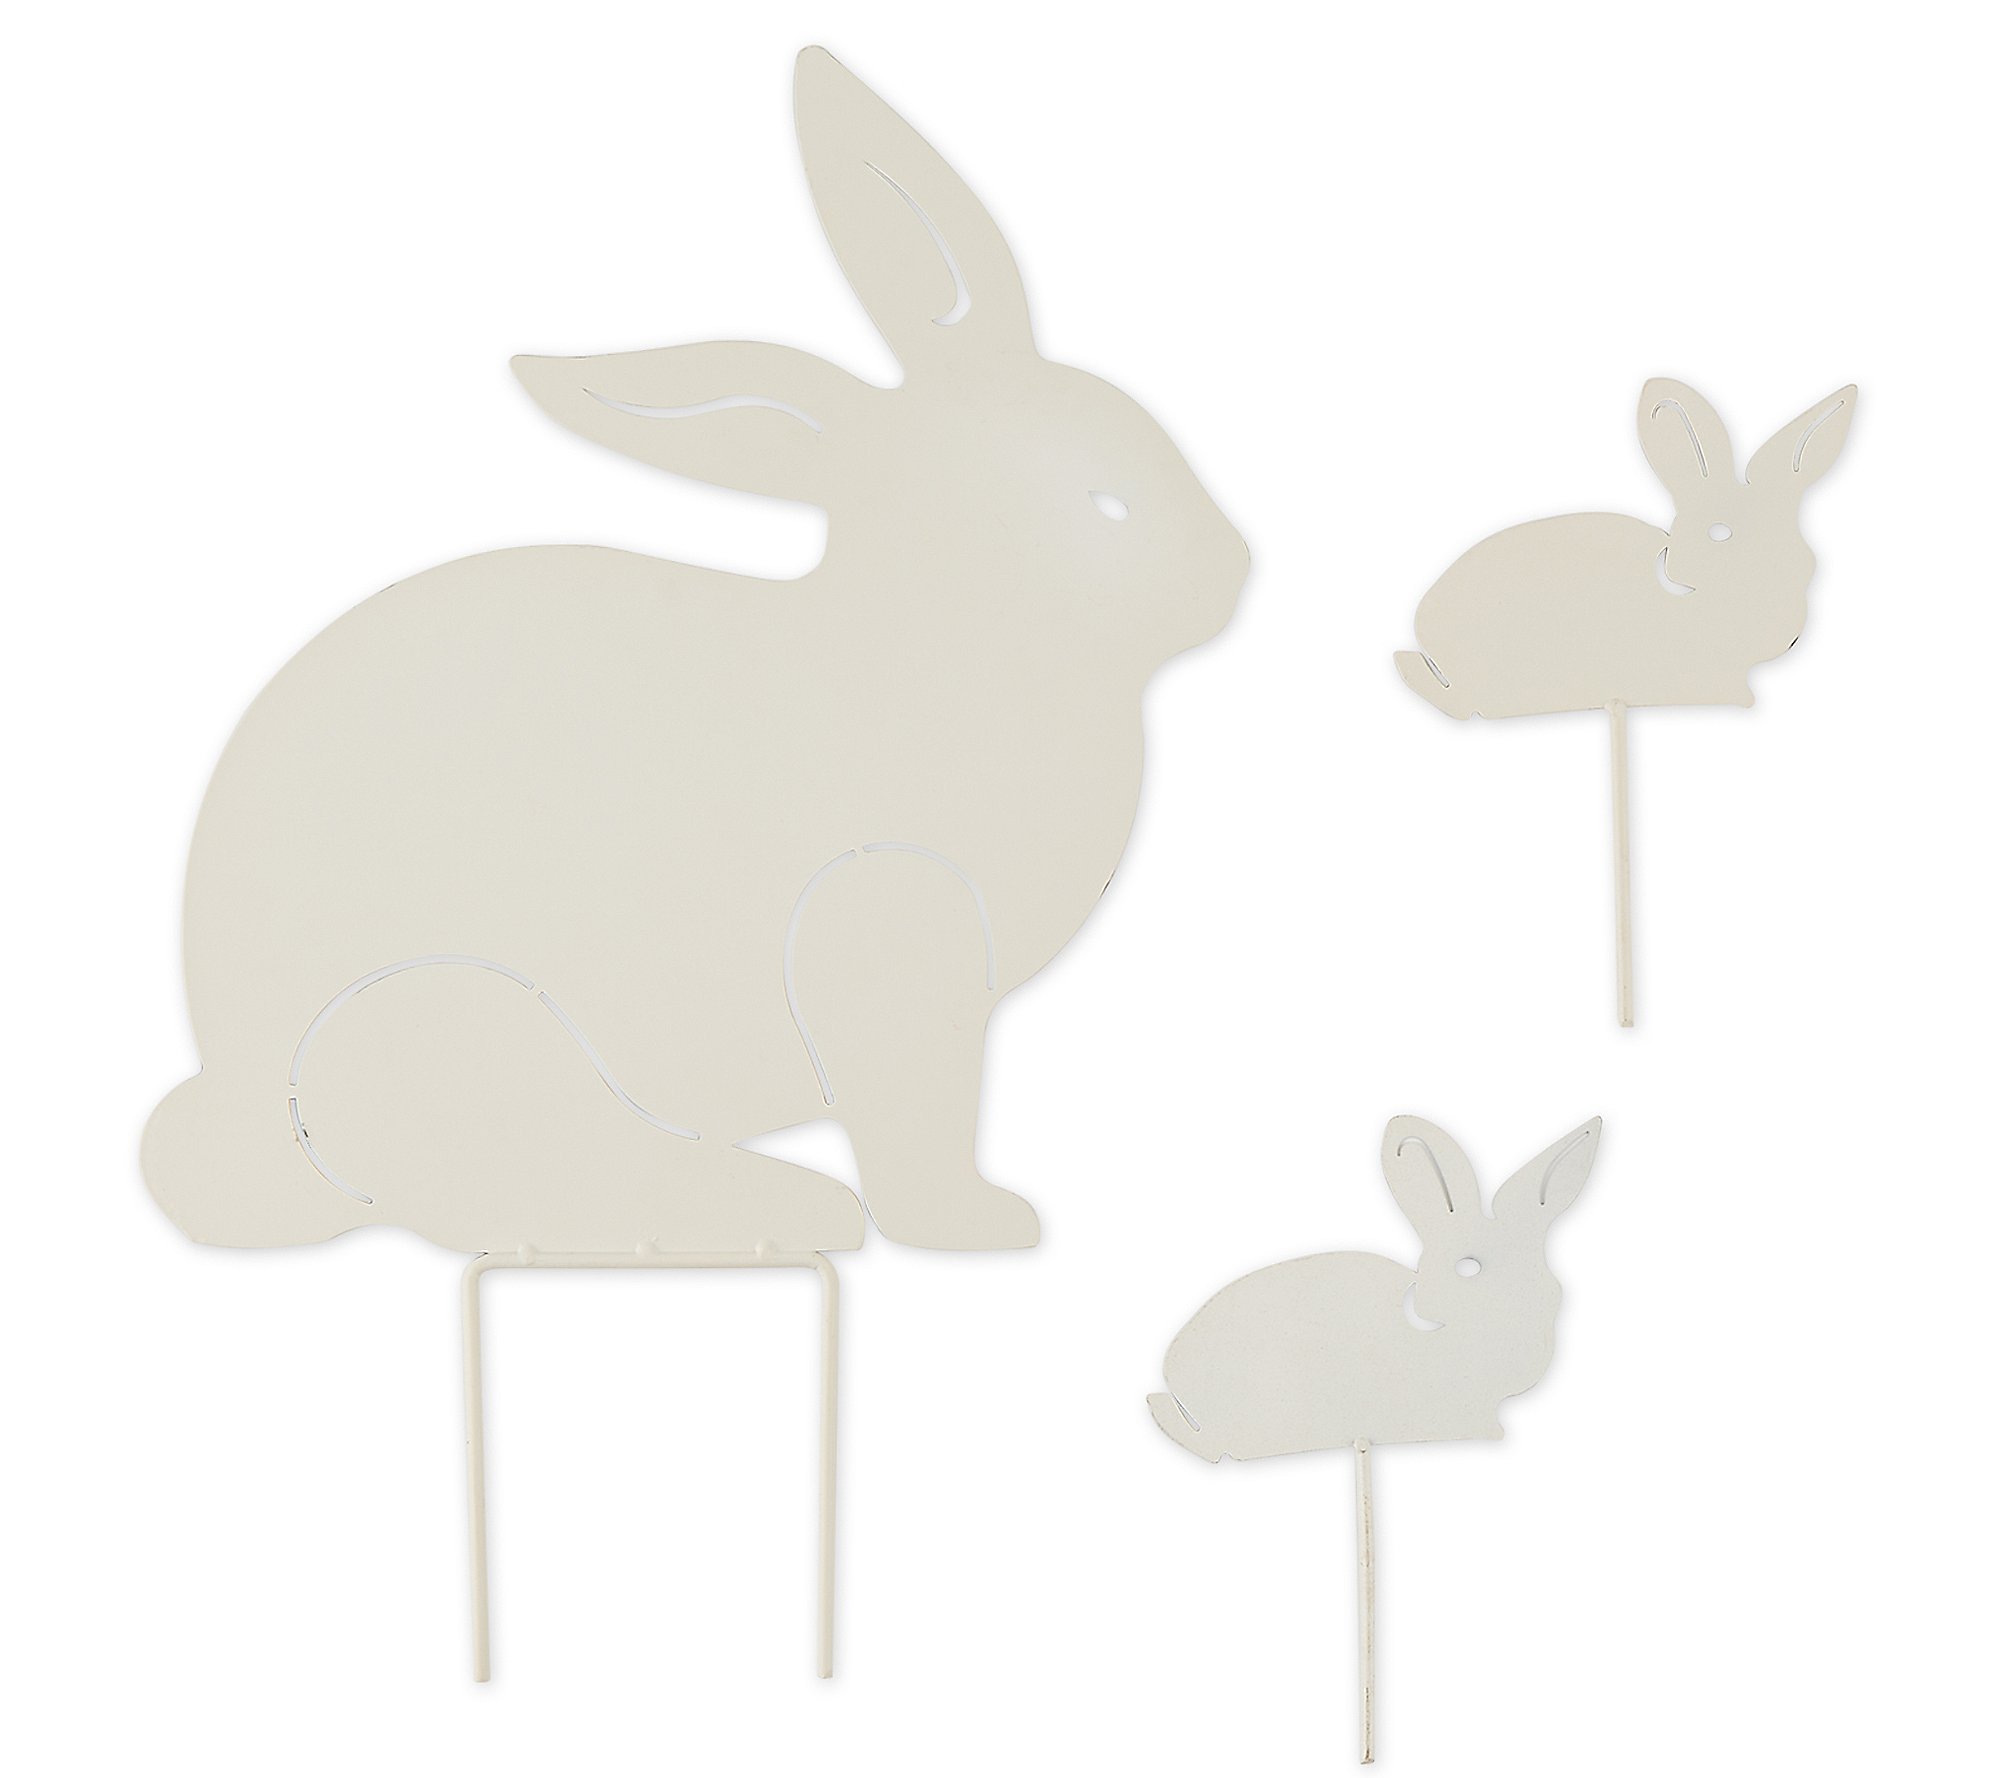 Design Imports Set of 3 Rabbit Family Garden St akes